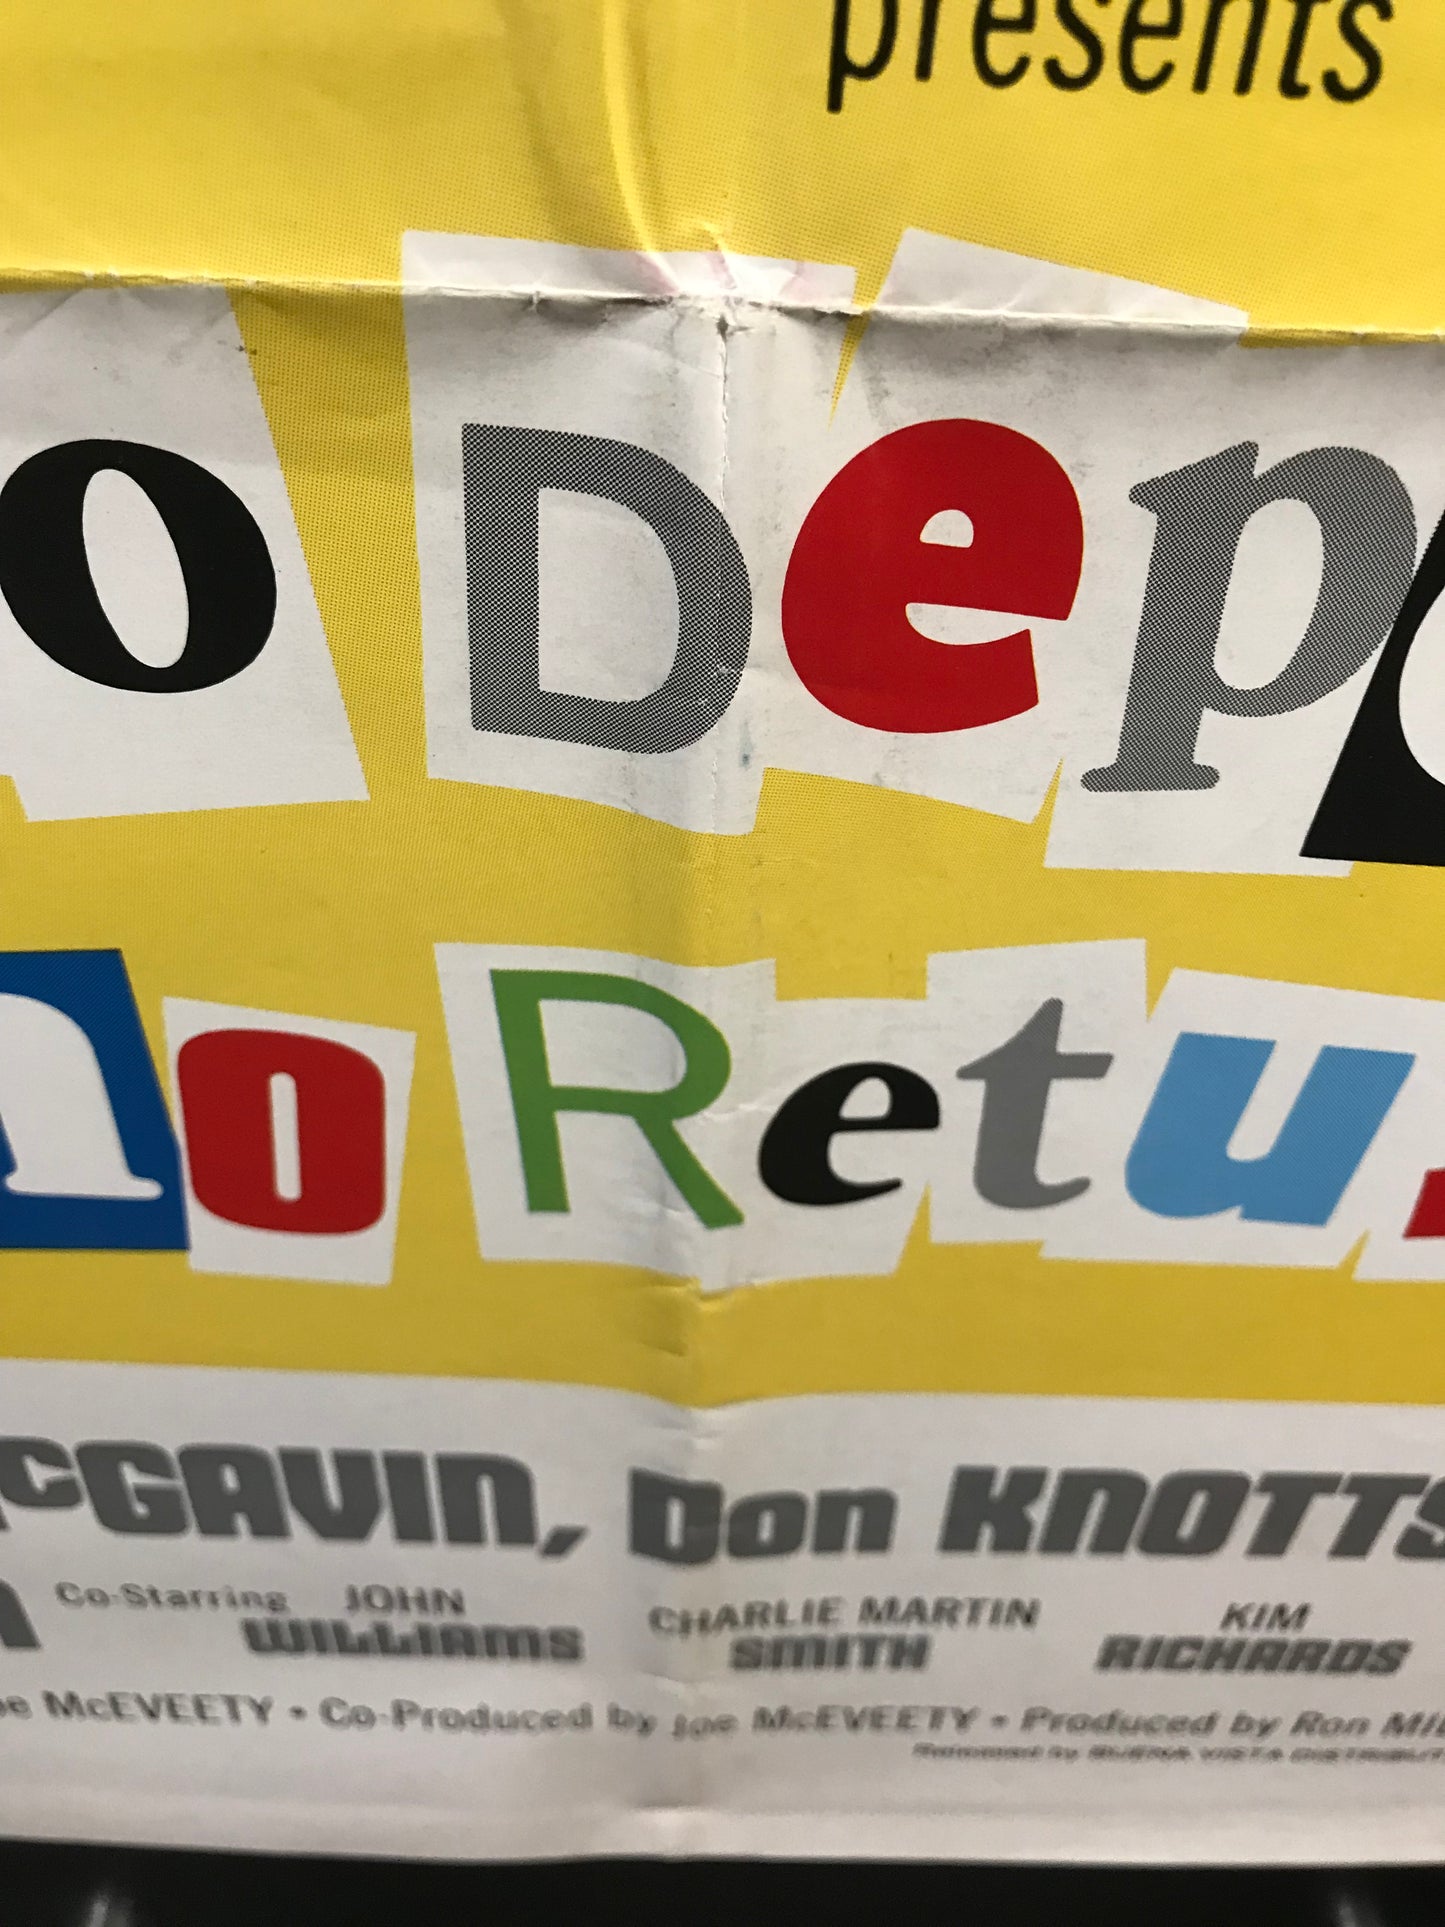 No Deposit No Return Original One Sheet Poster 1976